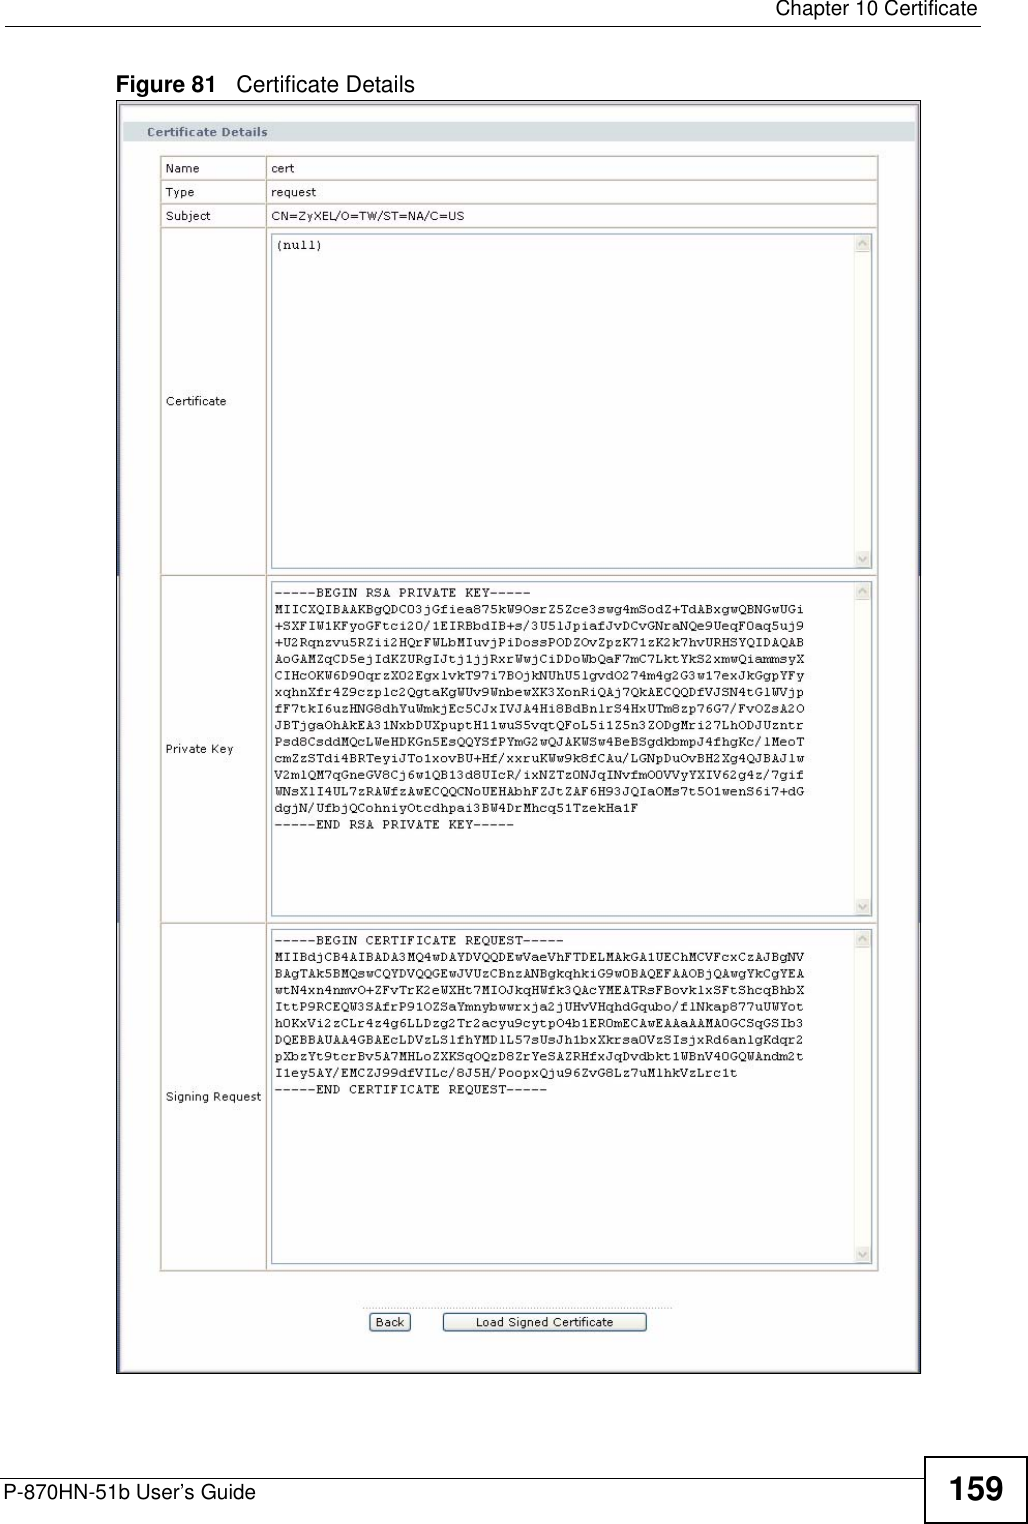  Chapter 10 CertificateP-870HN-51b User’s Guide 159Figure 81   Certificate Details